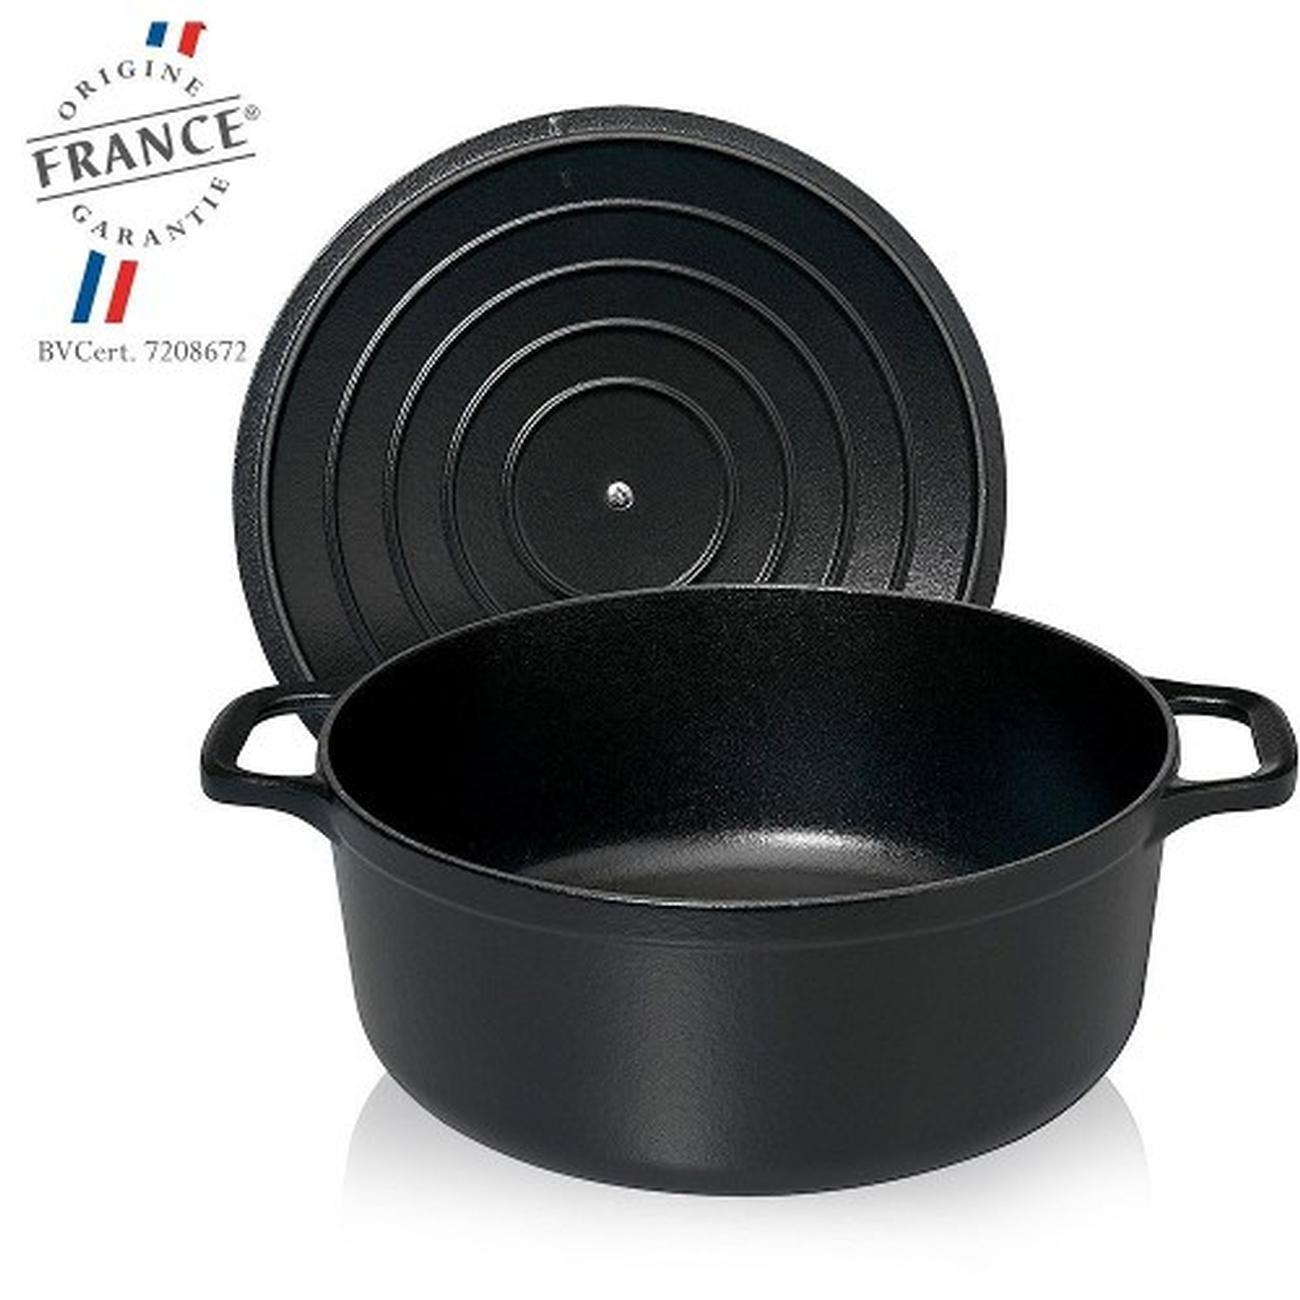 chasseur-round-casserole-26cm-matte-black - Chasseur Round Casserole 26cm-Matte Black